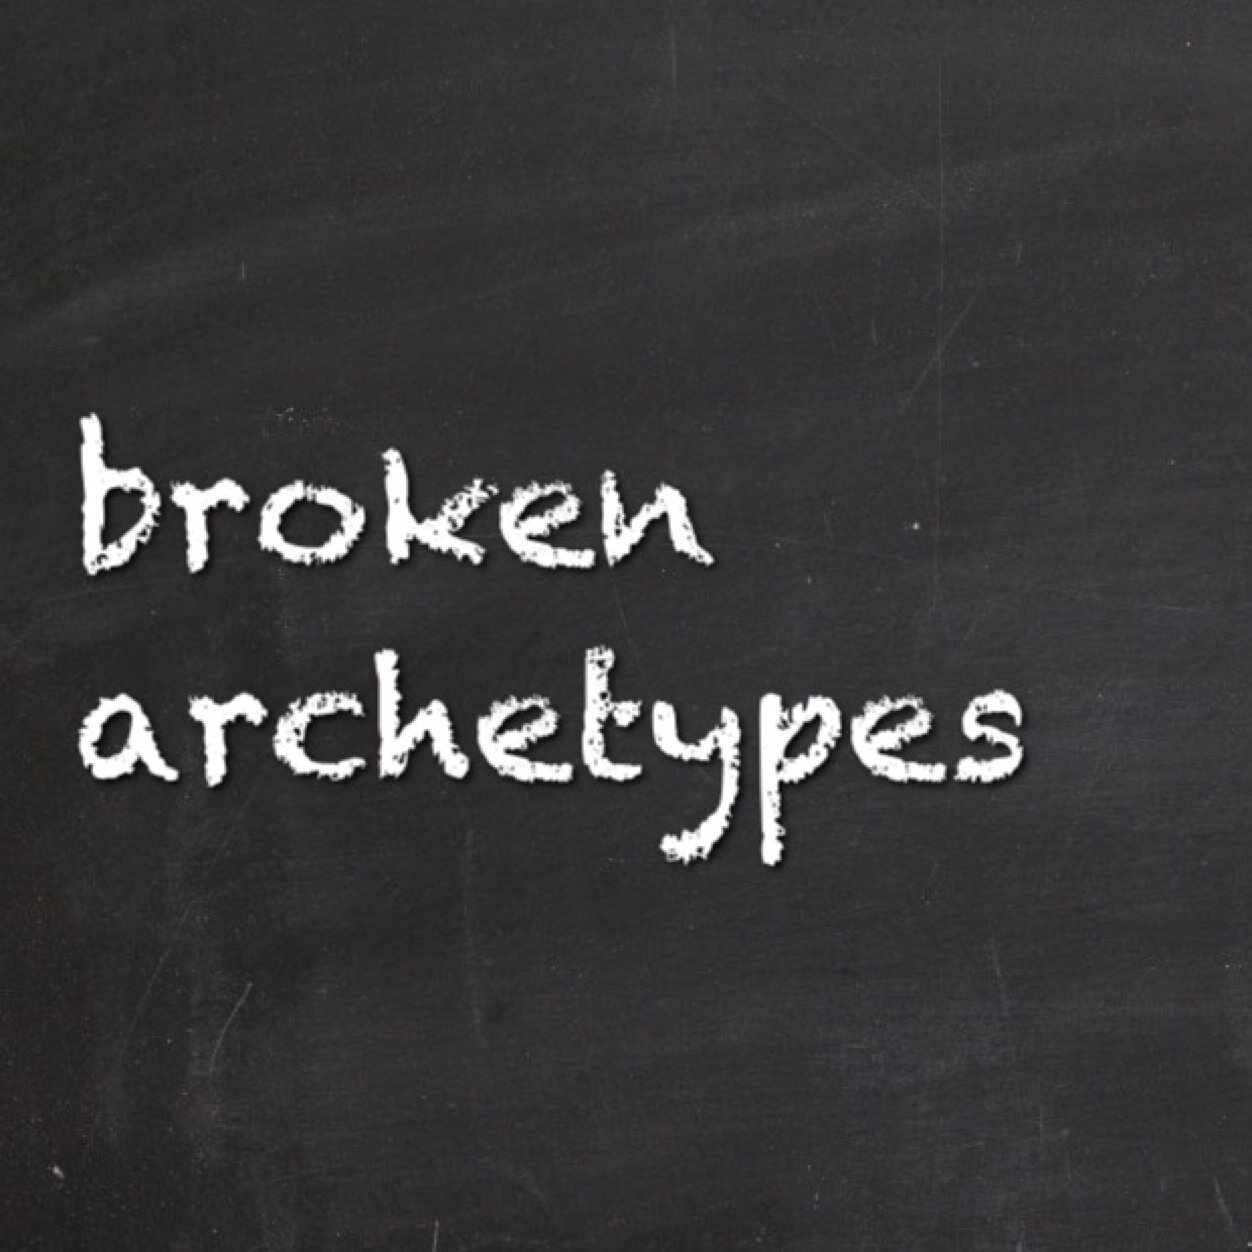 life is broken - archetypes are wrong Instagram @brokenarchetypes